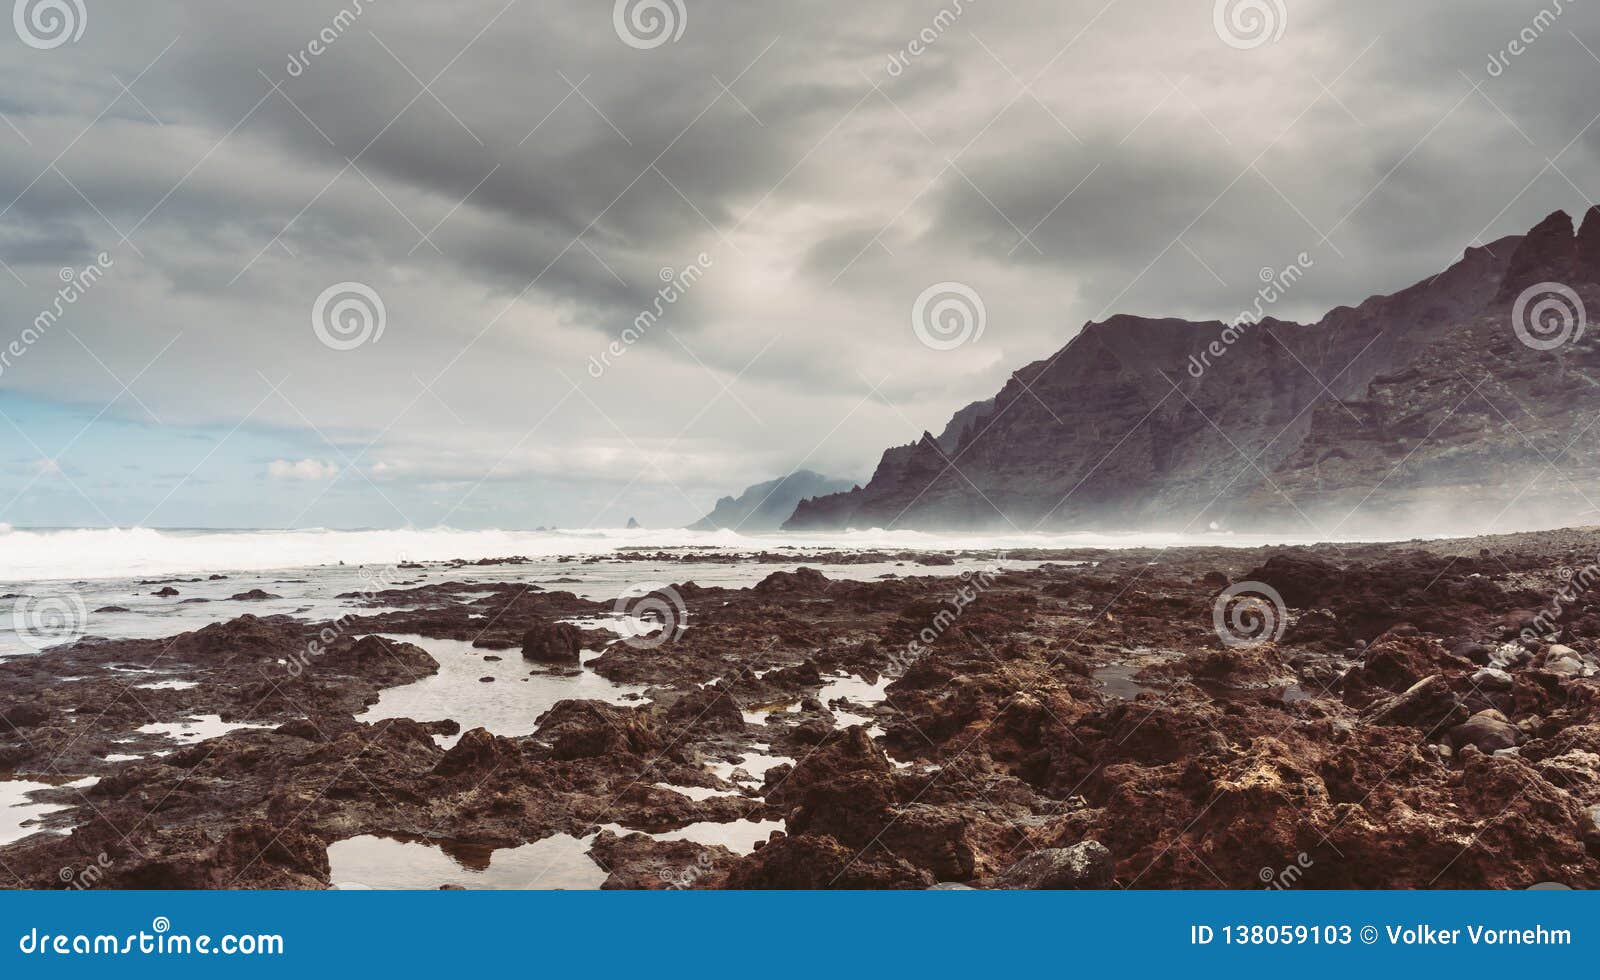 punta del hidalgo, tenerife, espania - october 27, 2018: panorama of the rocky beach of punta de hidalgo and the waves breaking at